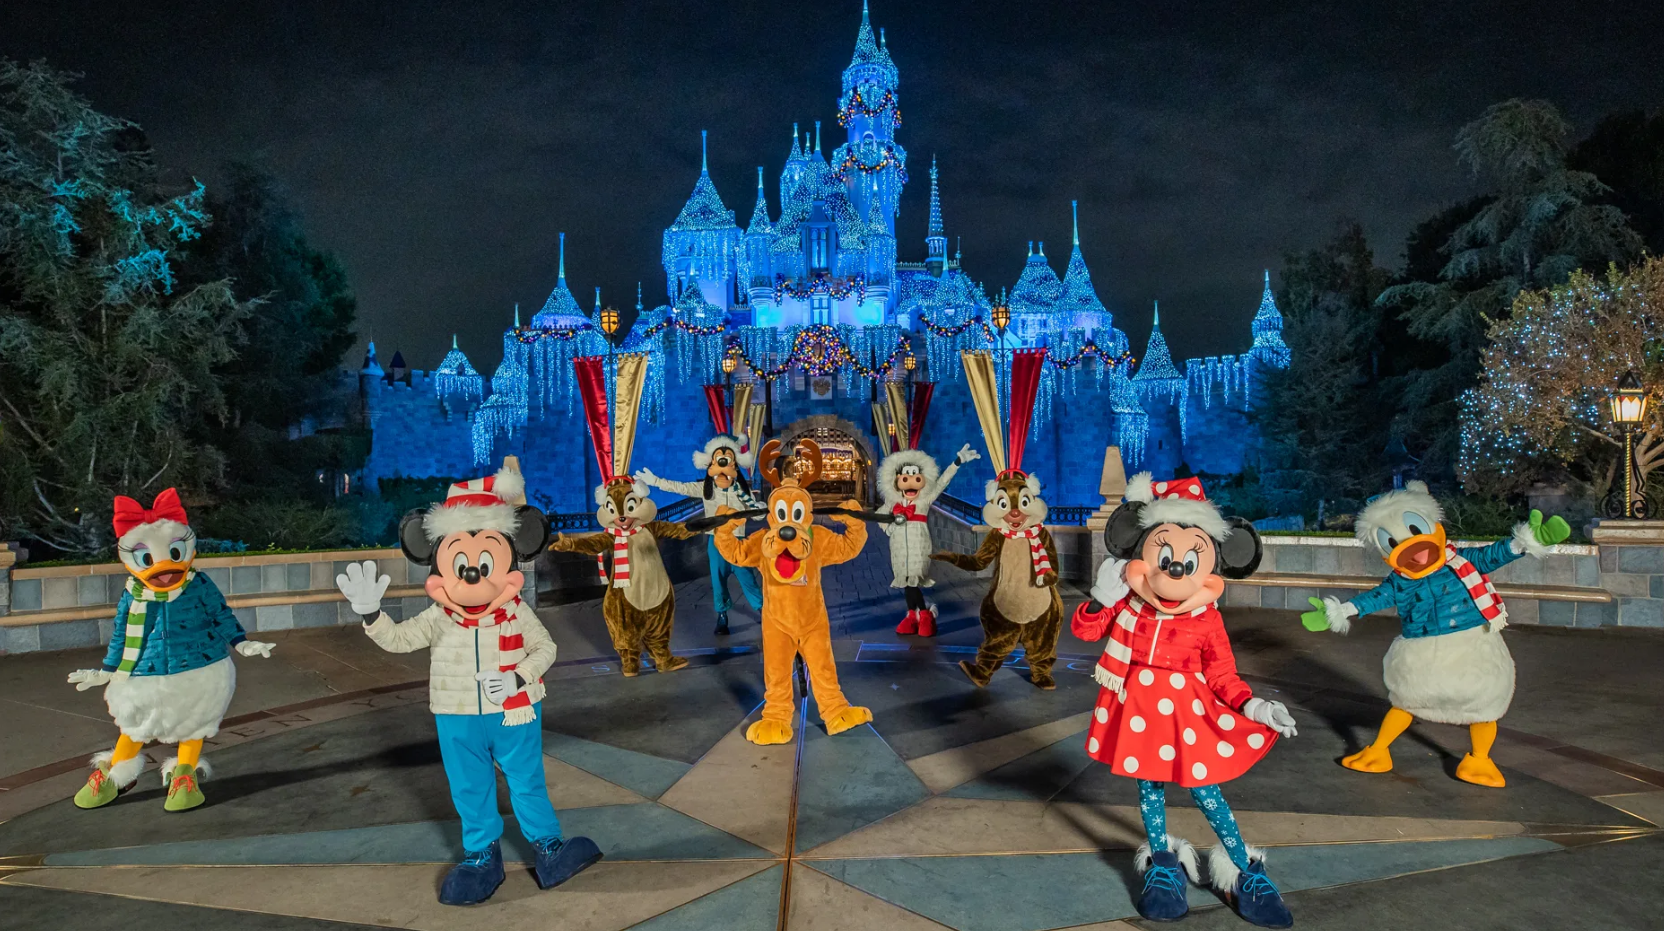 The holidays at Disneyland Resort